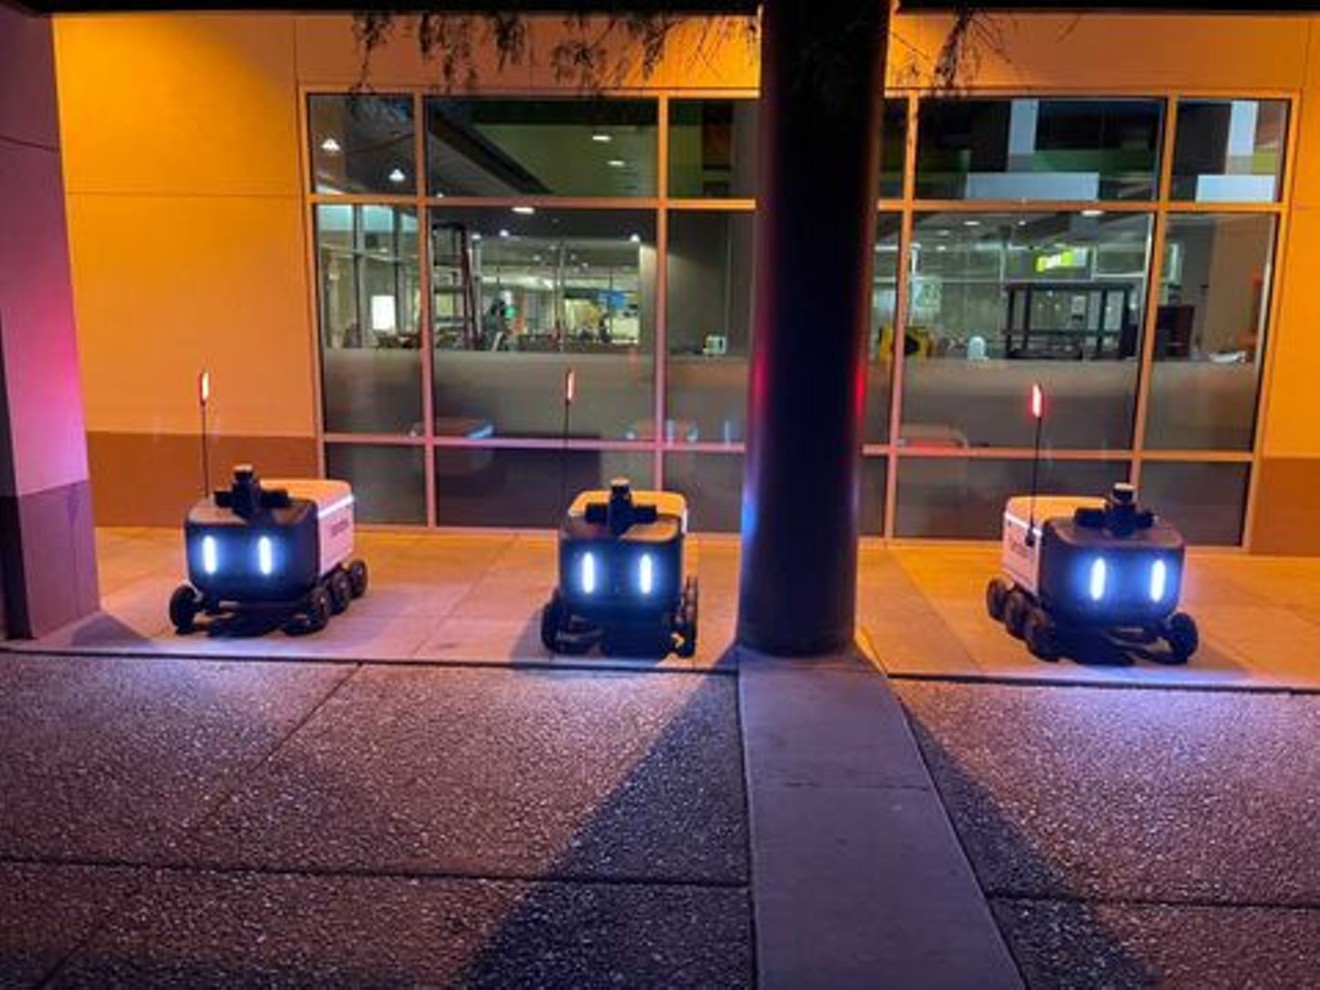 Food delivery robots roam the University of Arizona campus.